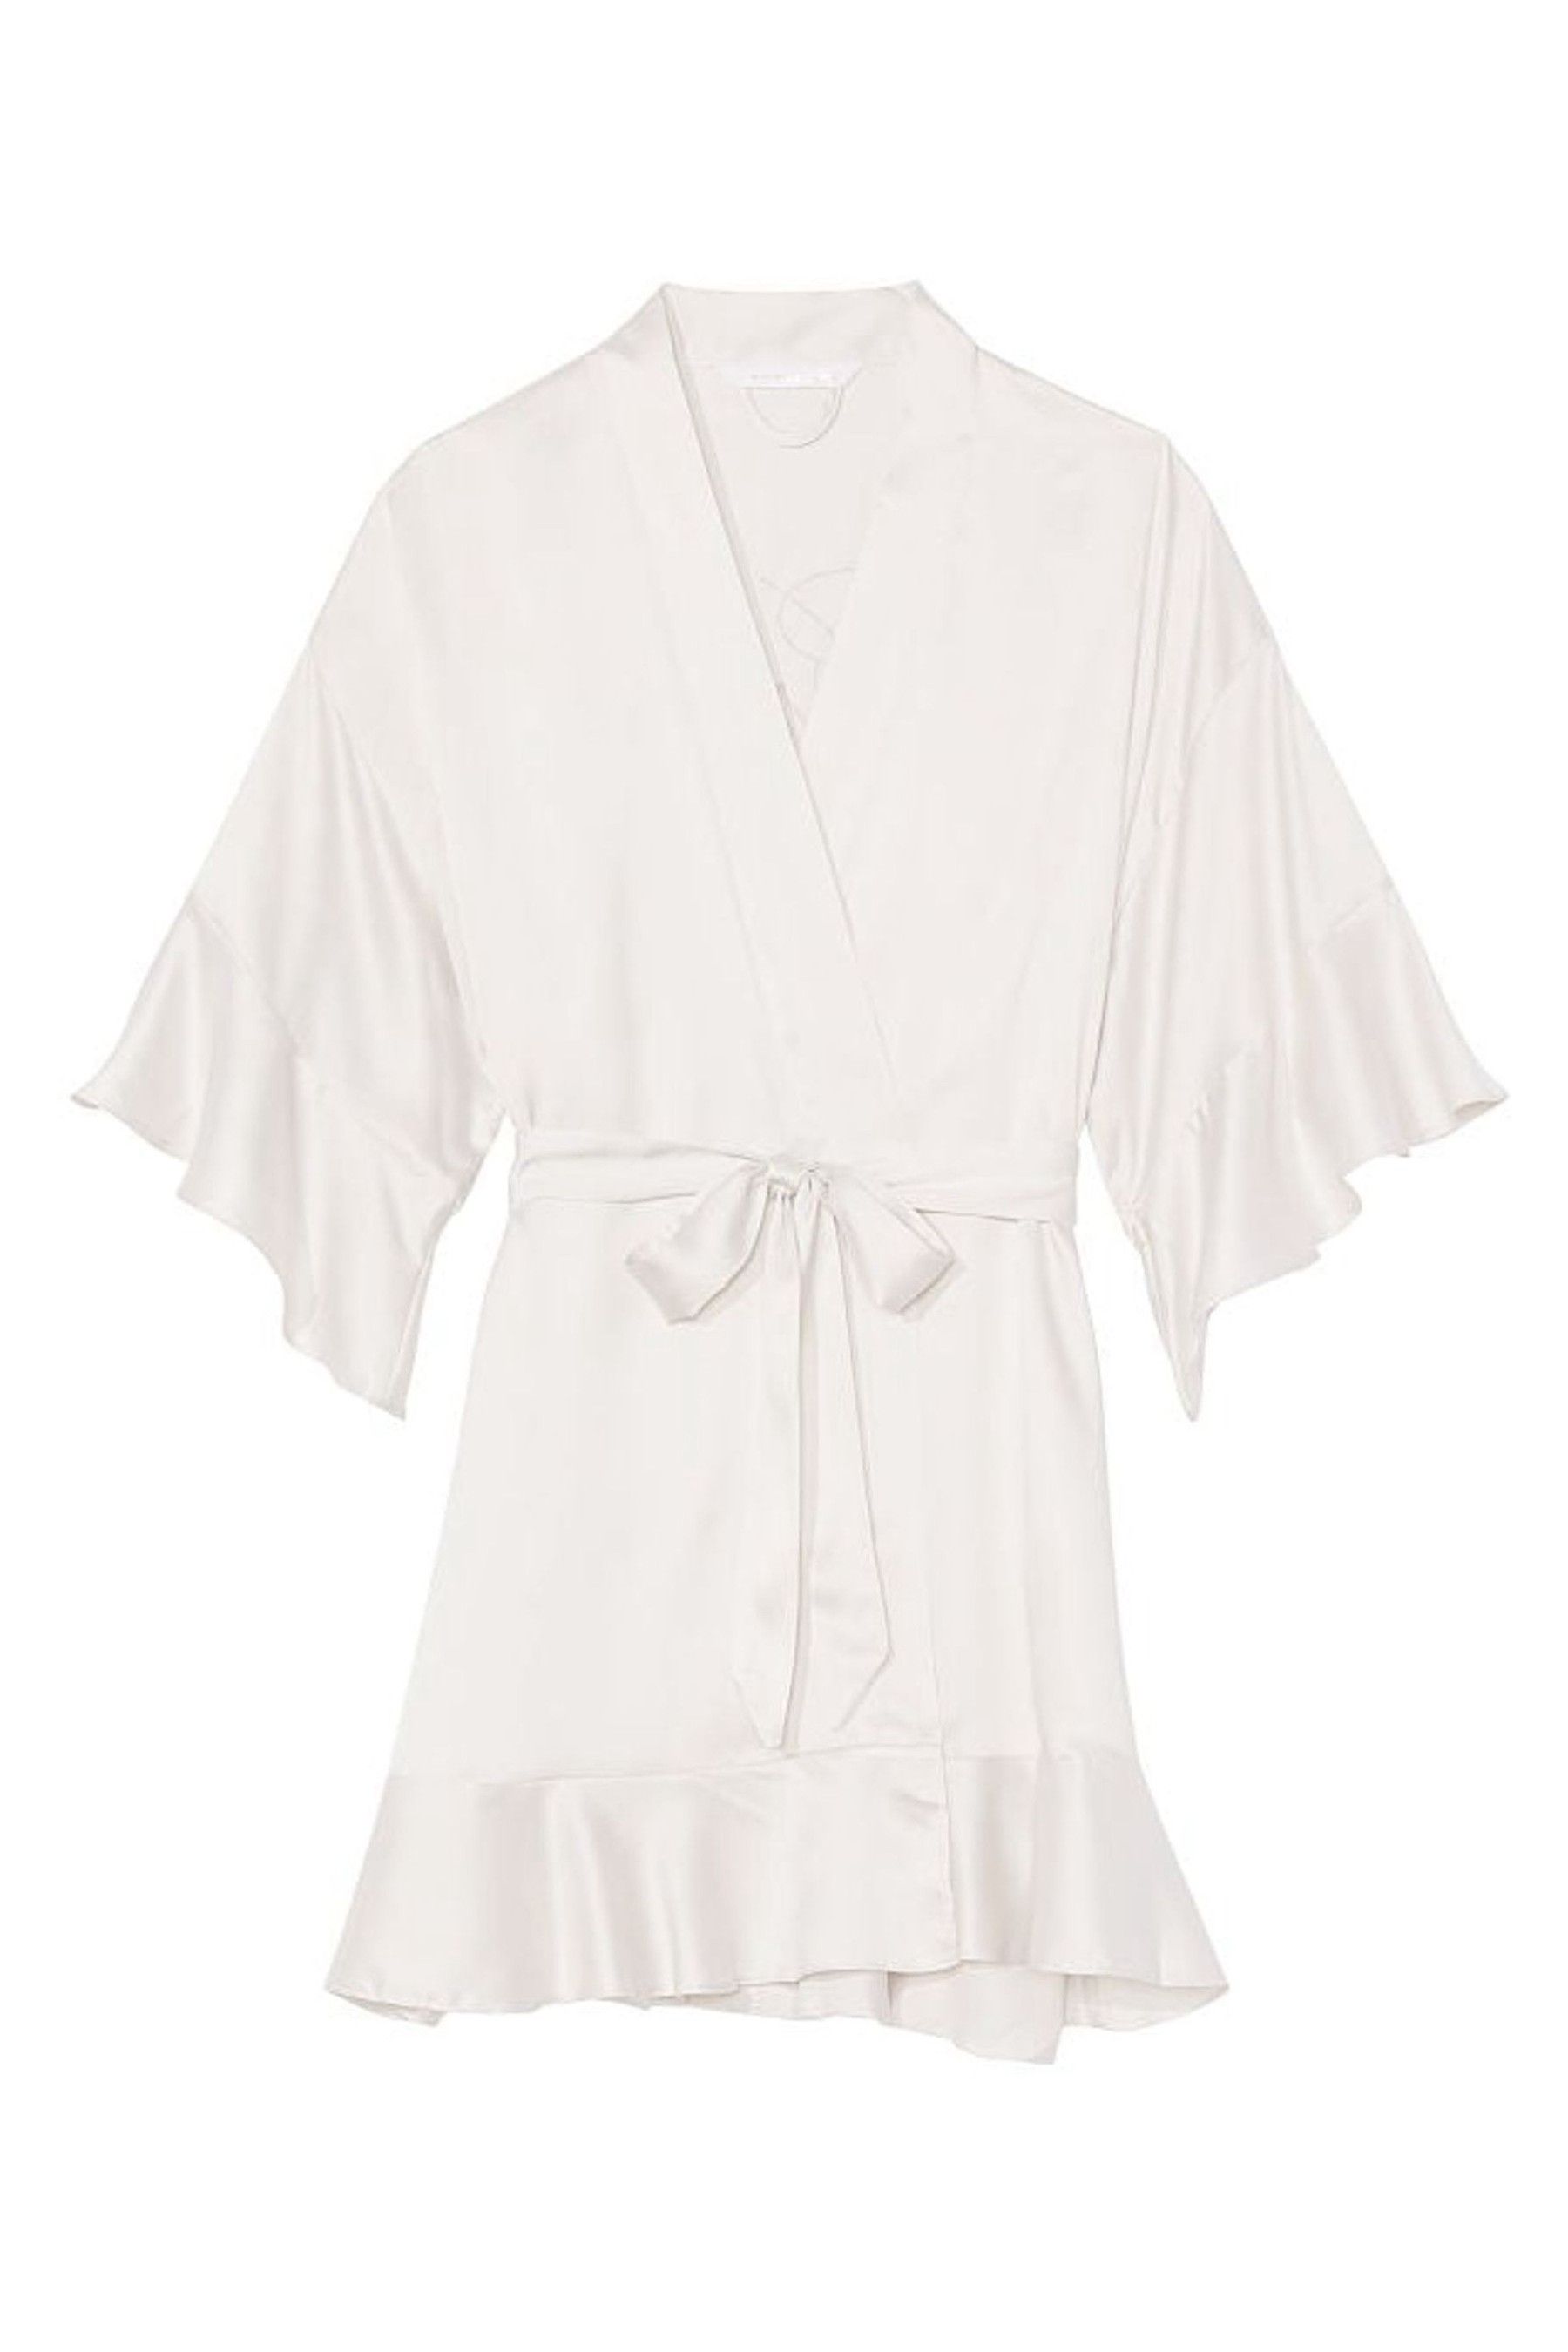 Buy Victoria's Secret Flounce Satin Robe from the Victoria's Secret UK ...